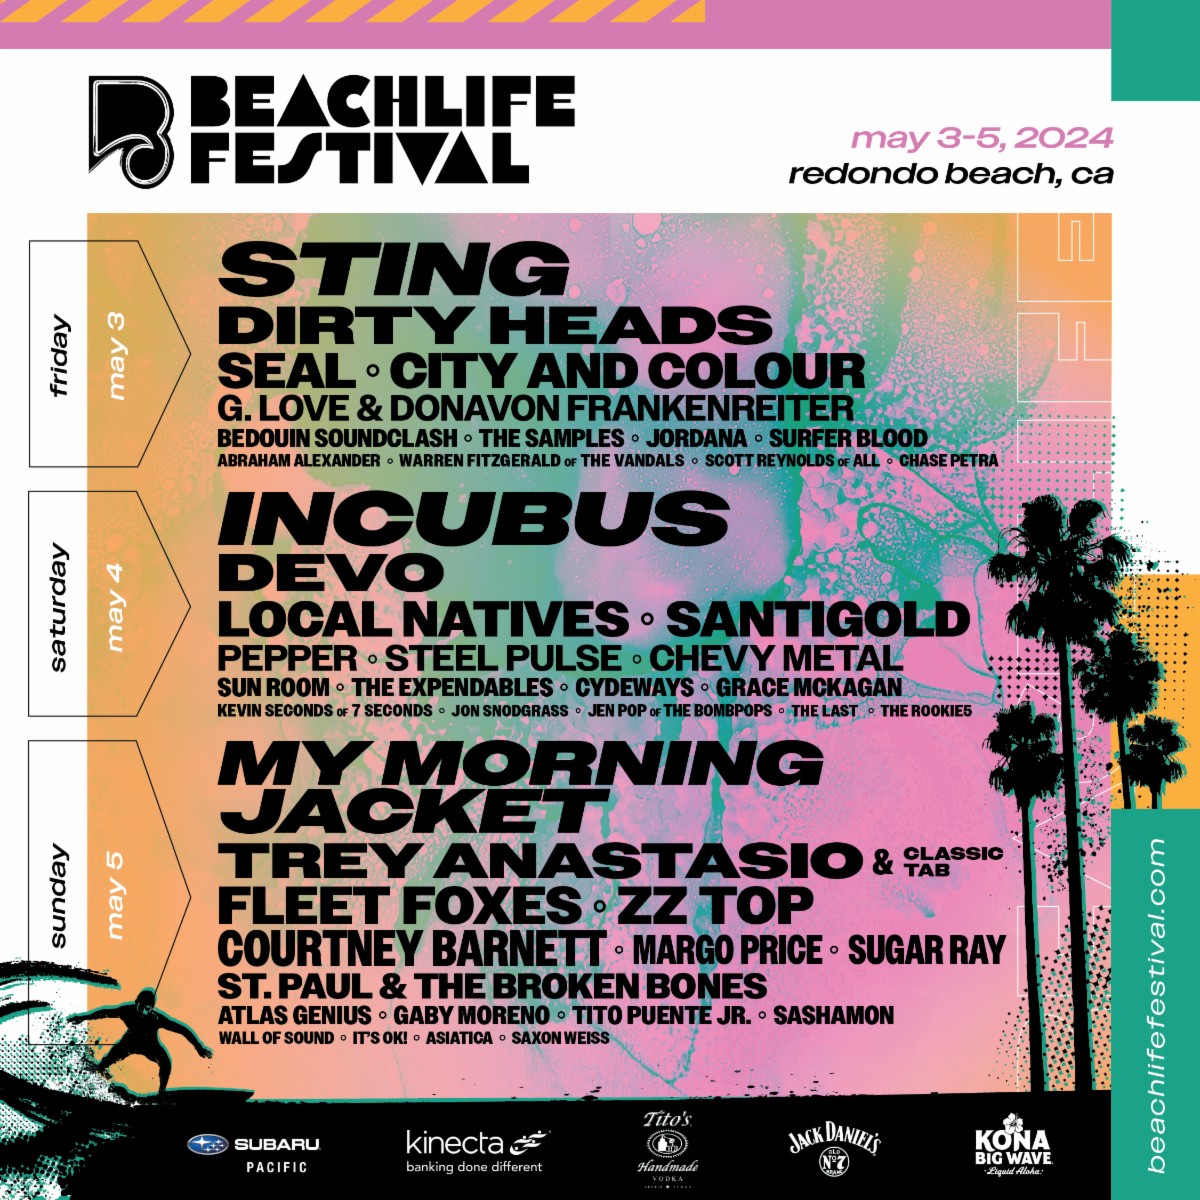 BeachLife Festival Posts Set Times & Reveals Onsite Activations, Fan Engagements, Giveaways & More